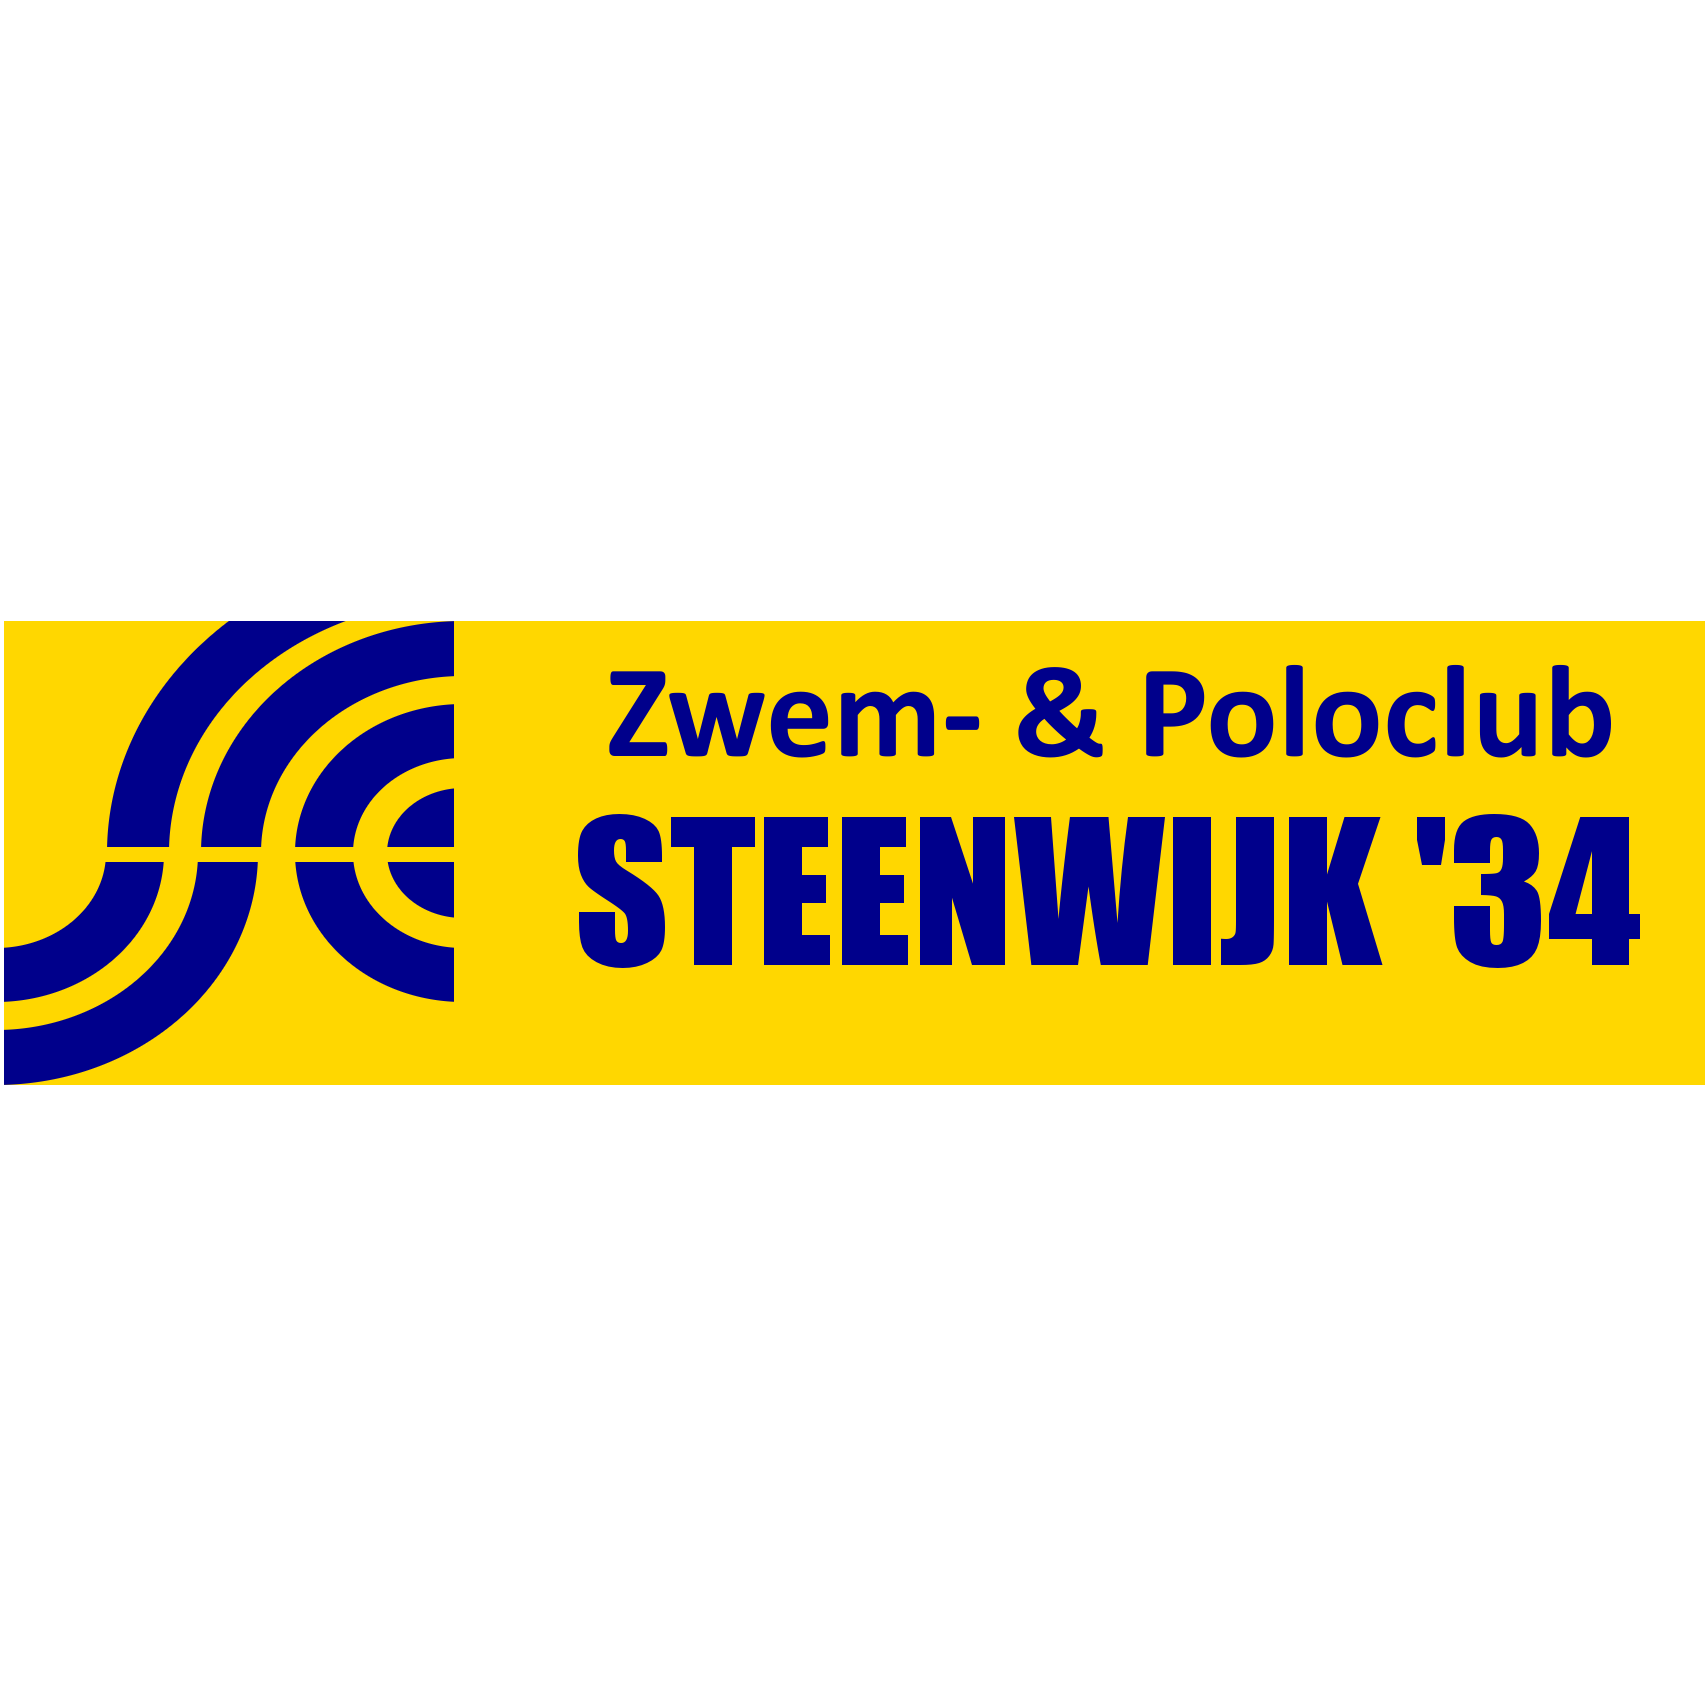 Zwem- en Poloclub Steenwijk 1934